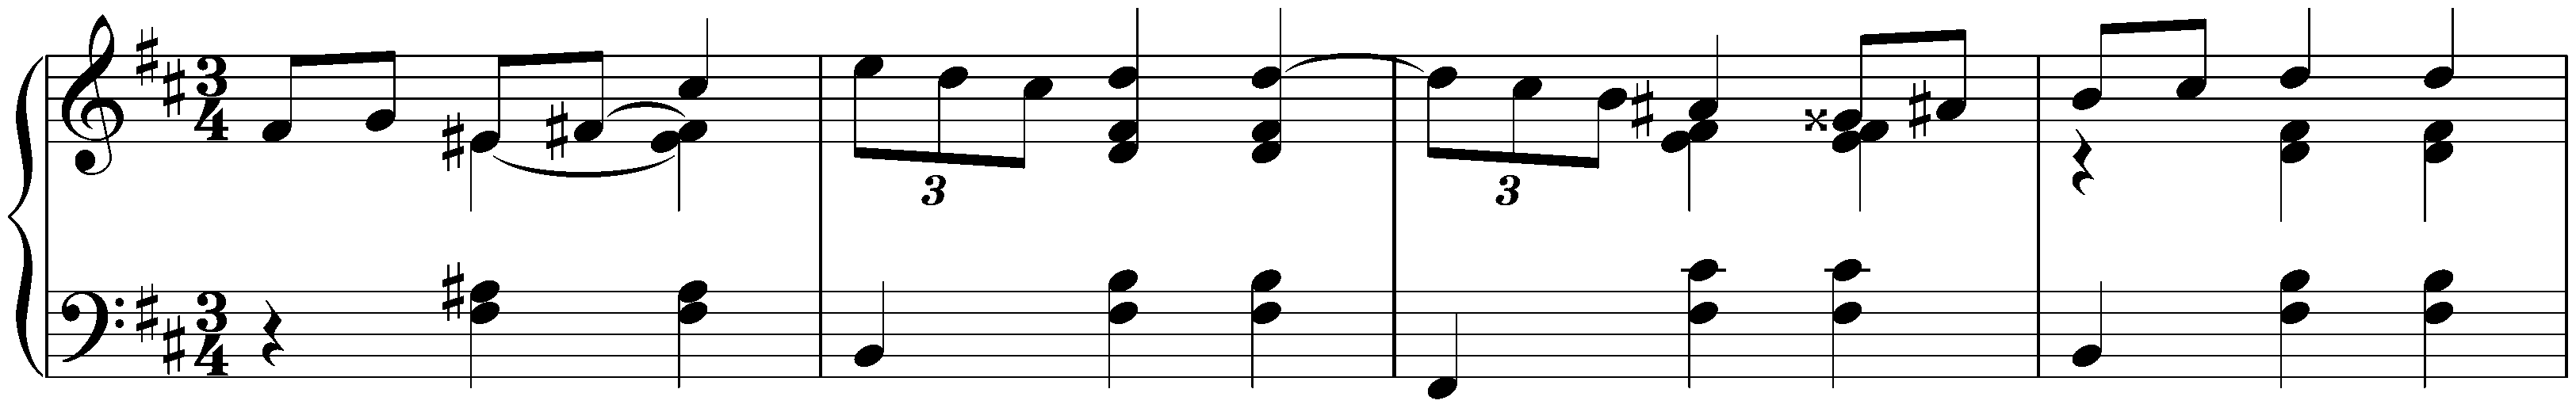 Mazurka in B minor, WoO 14